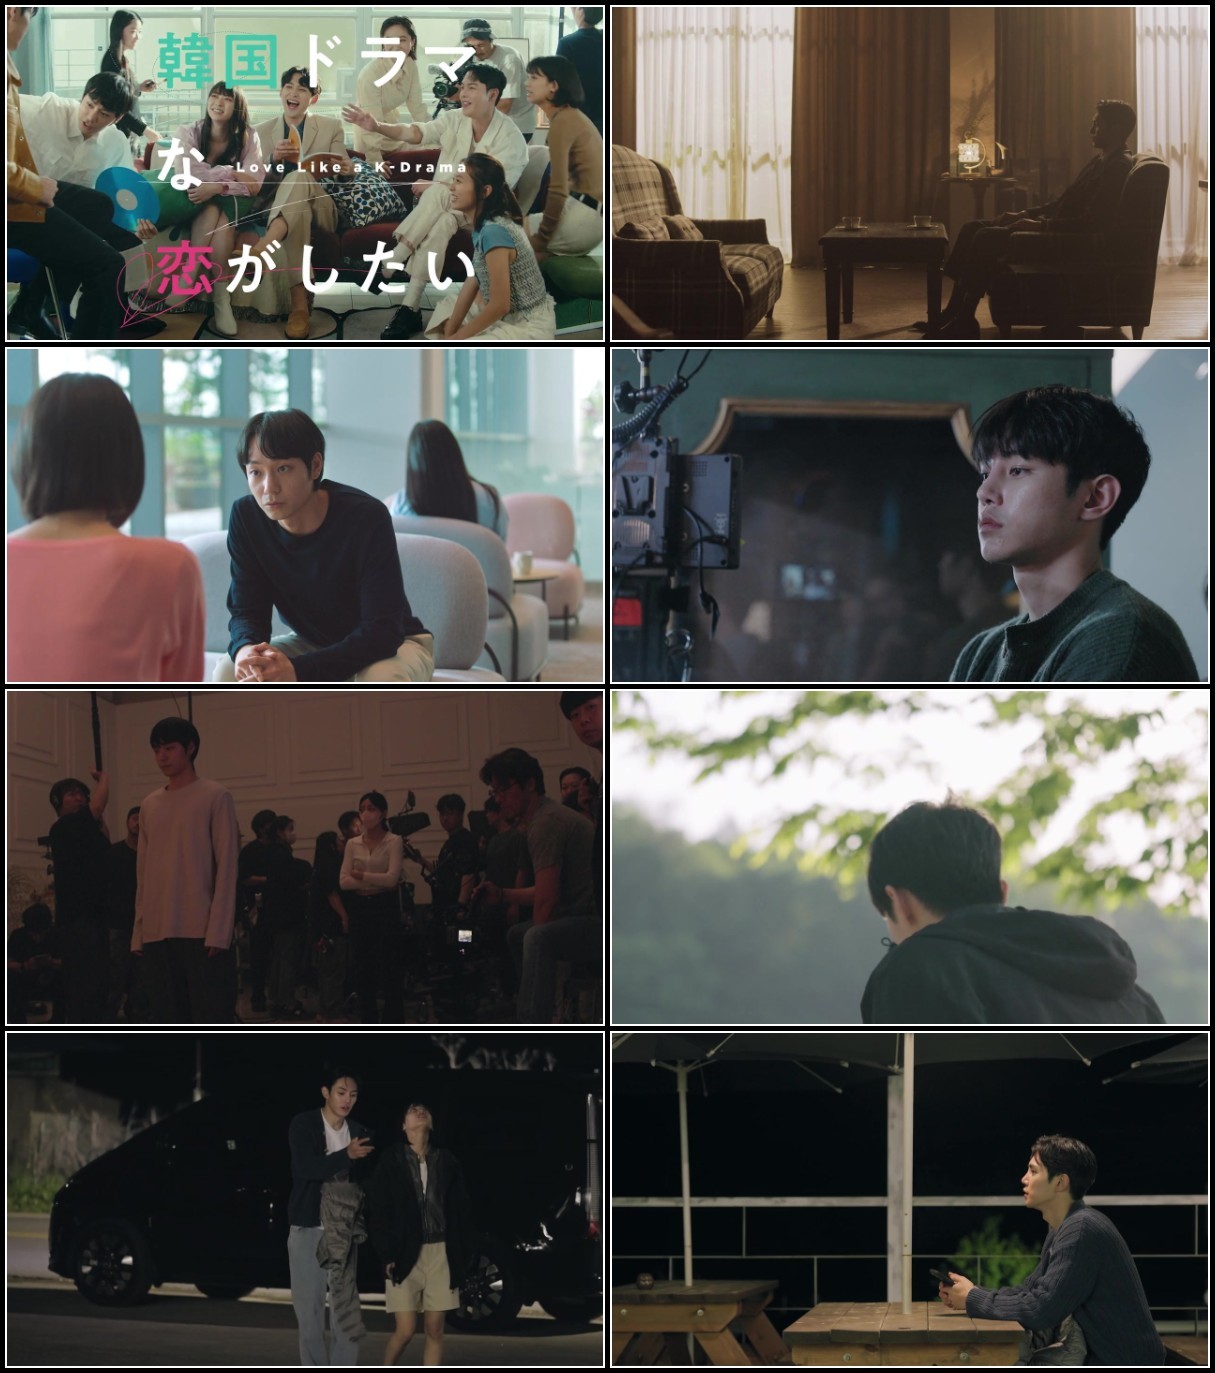 Love Like a K-Drama S01E03 720p WEB h264-EDITH